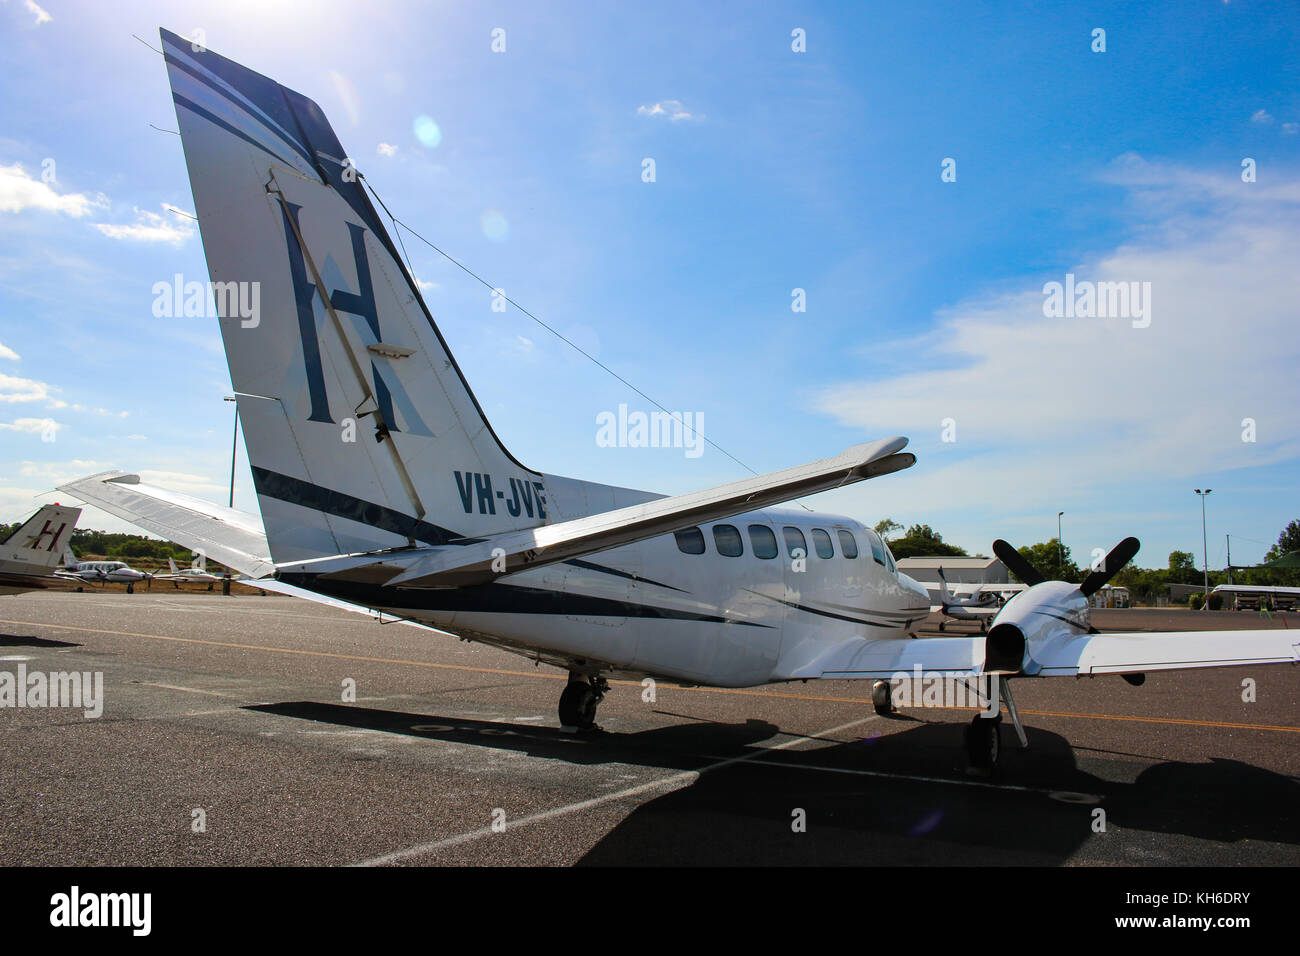 Small Passenger Plane at an Airport in Darwin, Australia Stock Photo